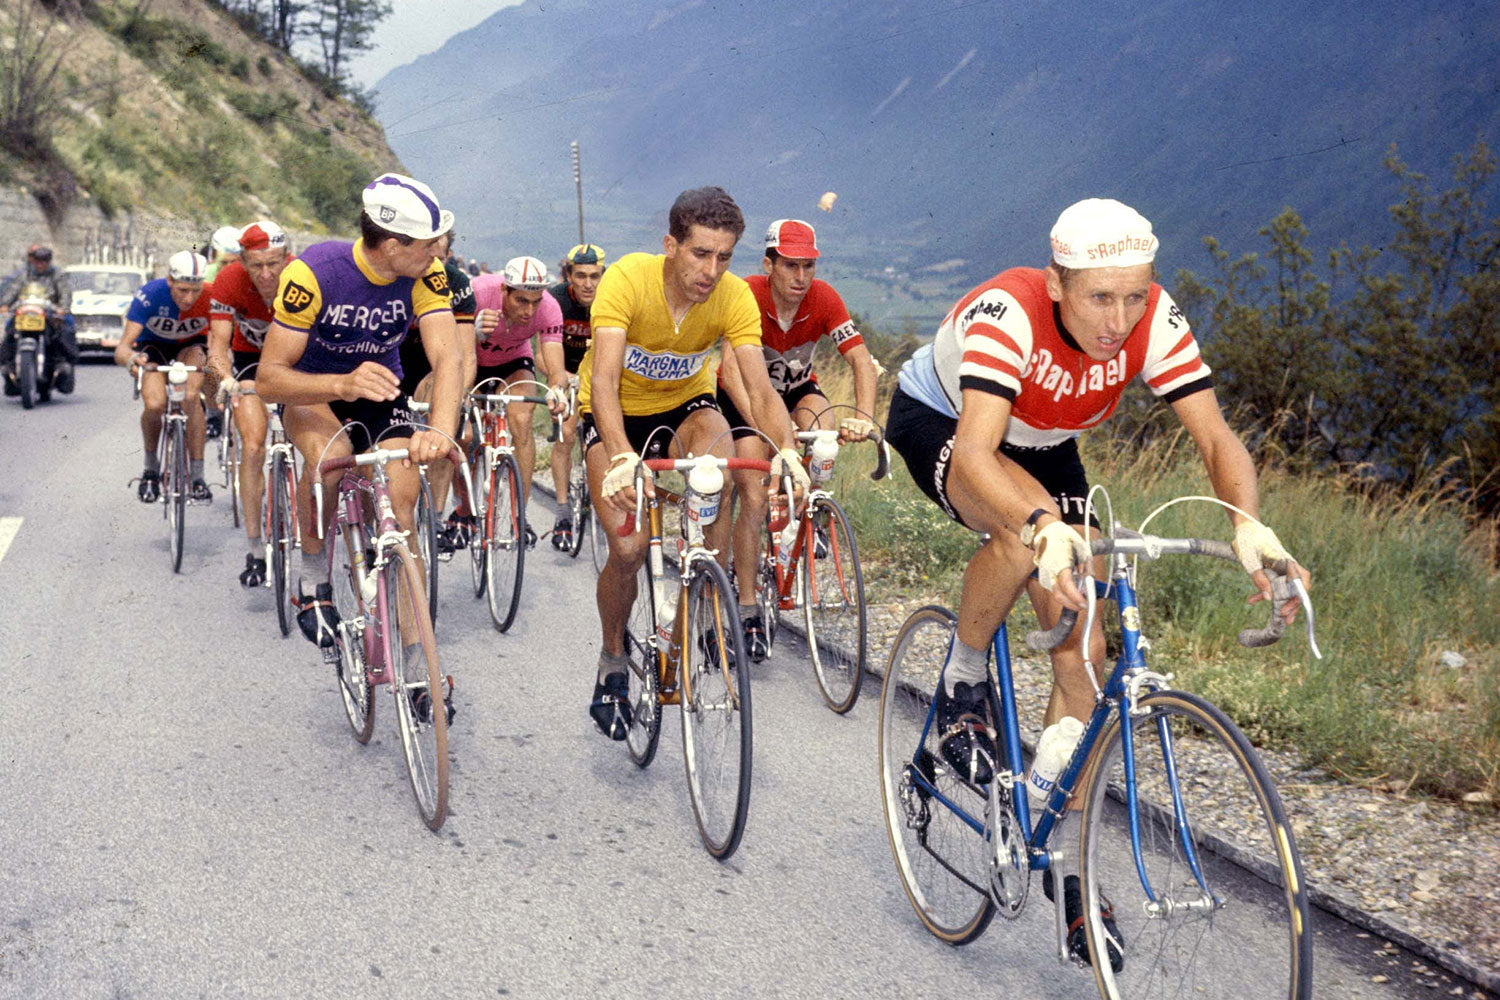 St Raphaël cycling team - Jacques Anquetil